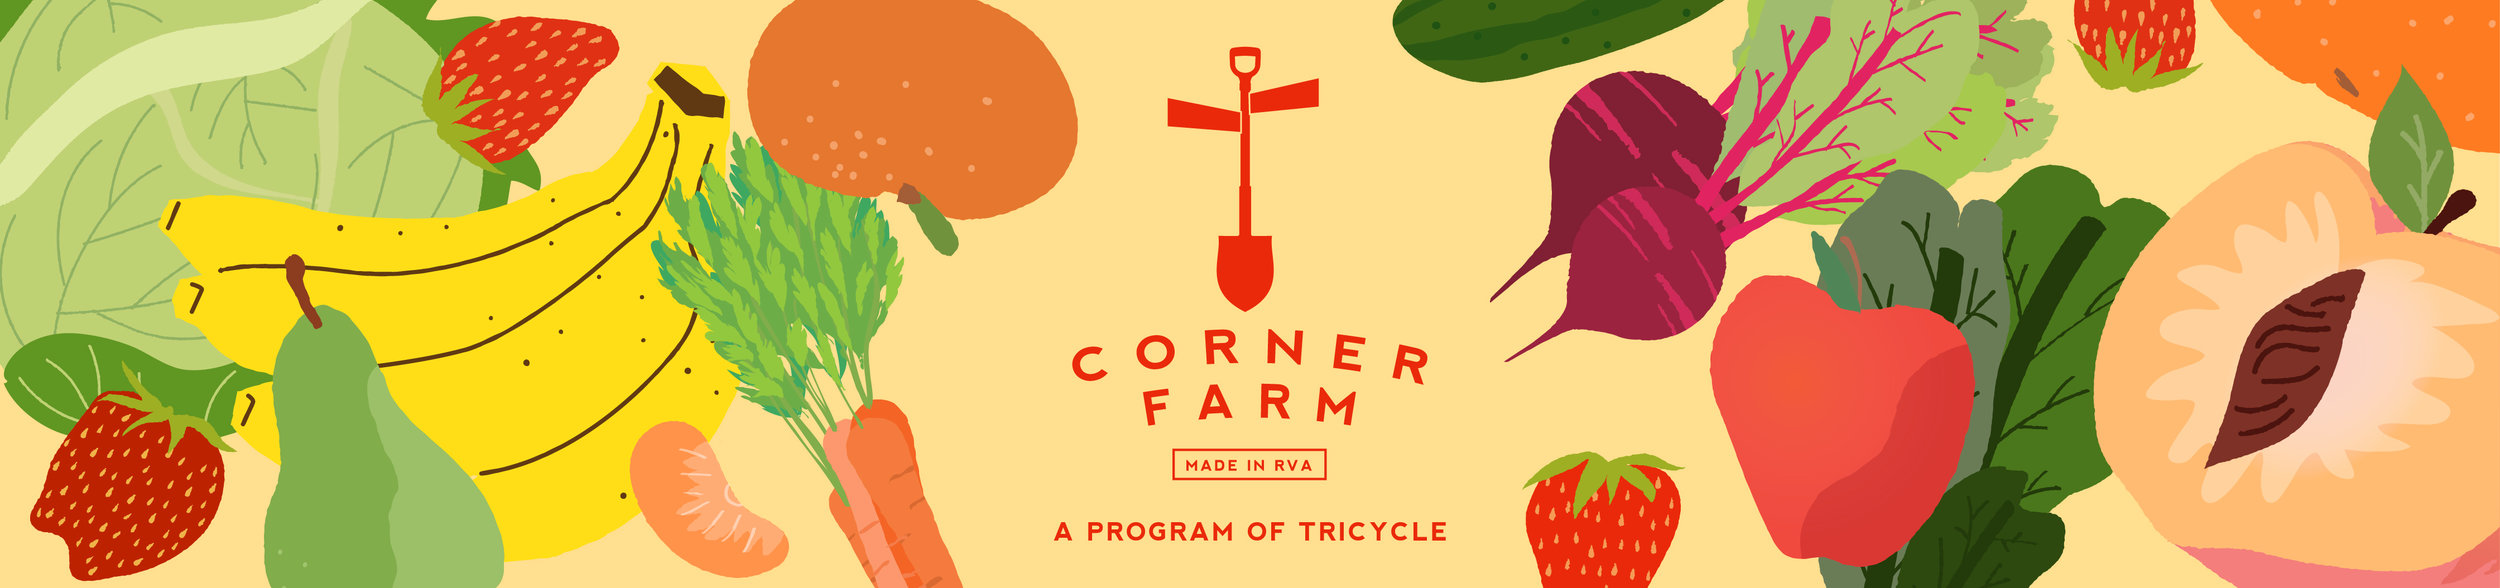 Tricycle | Illustrations for Corner Farm Program